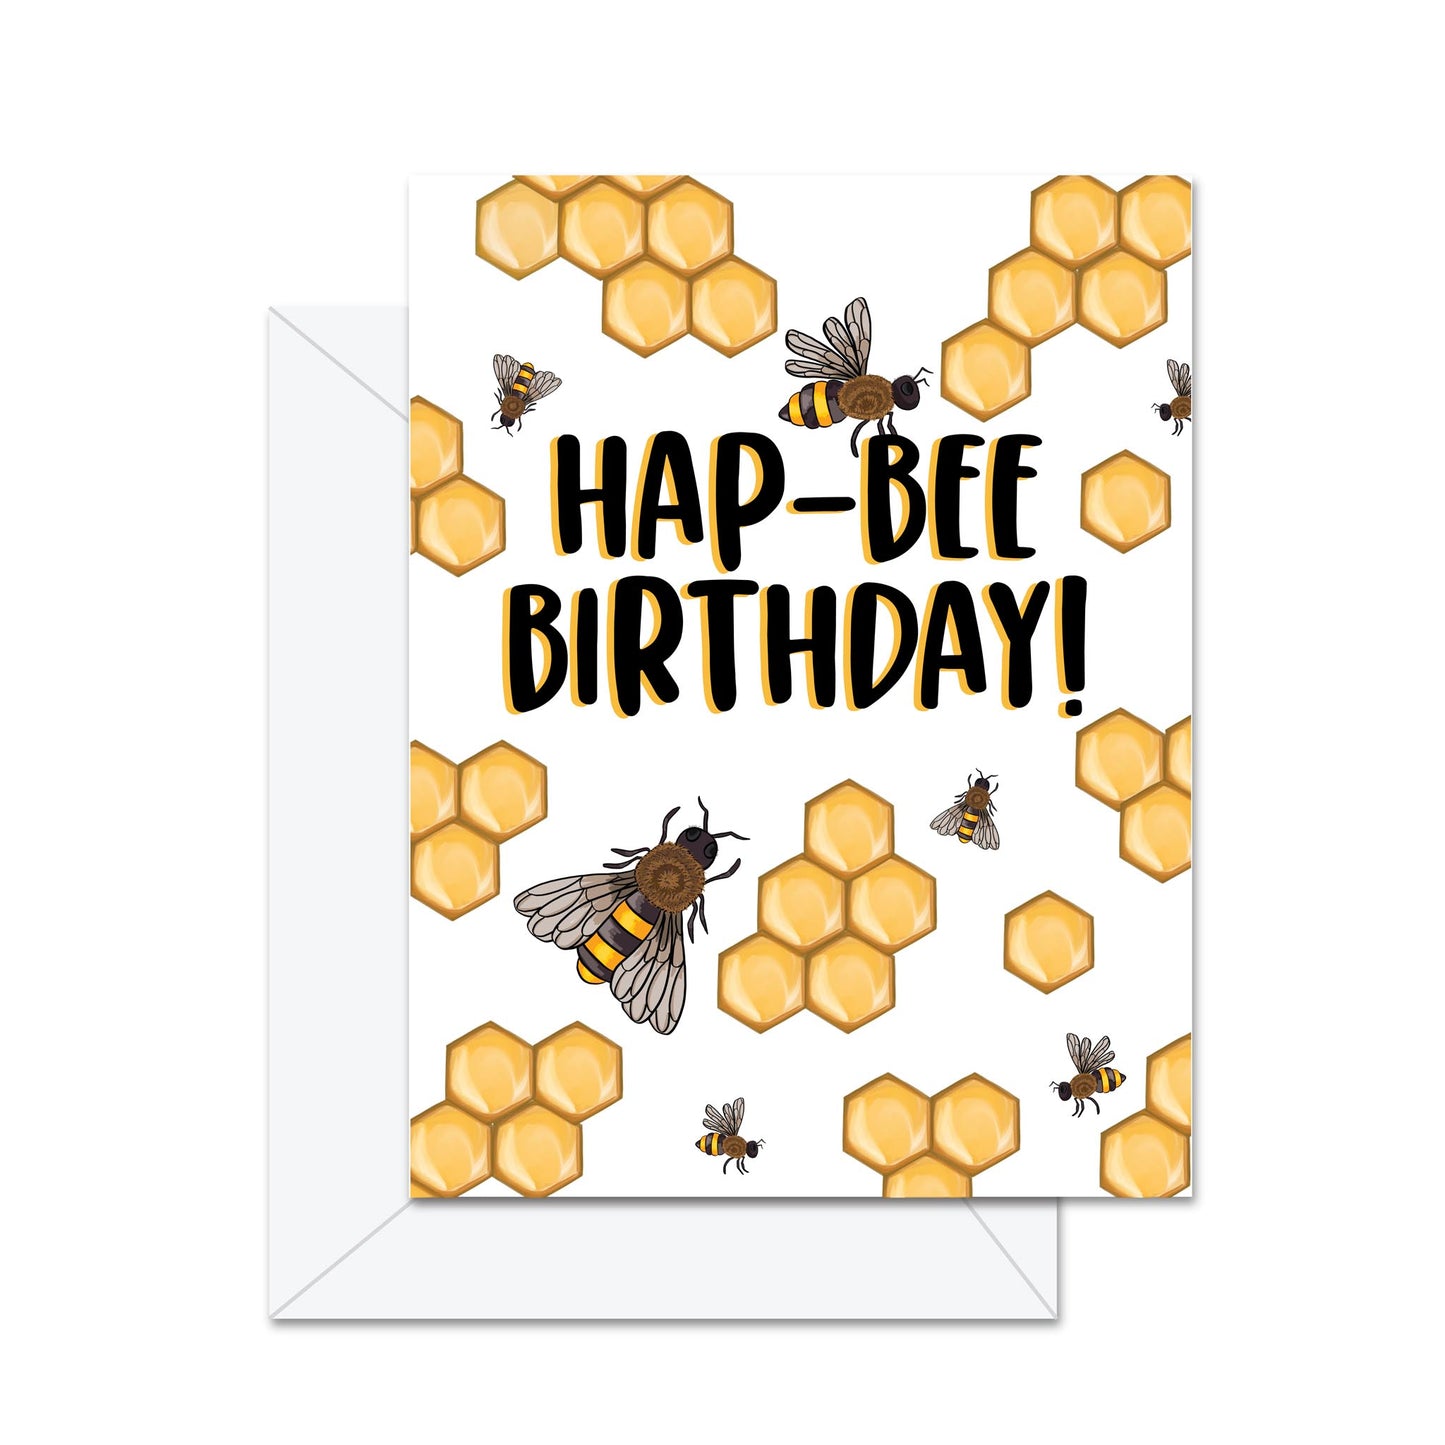 Hap-bee Birthday! - Greeting Card